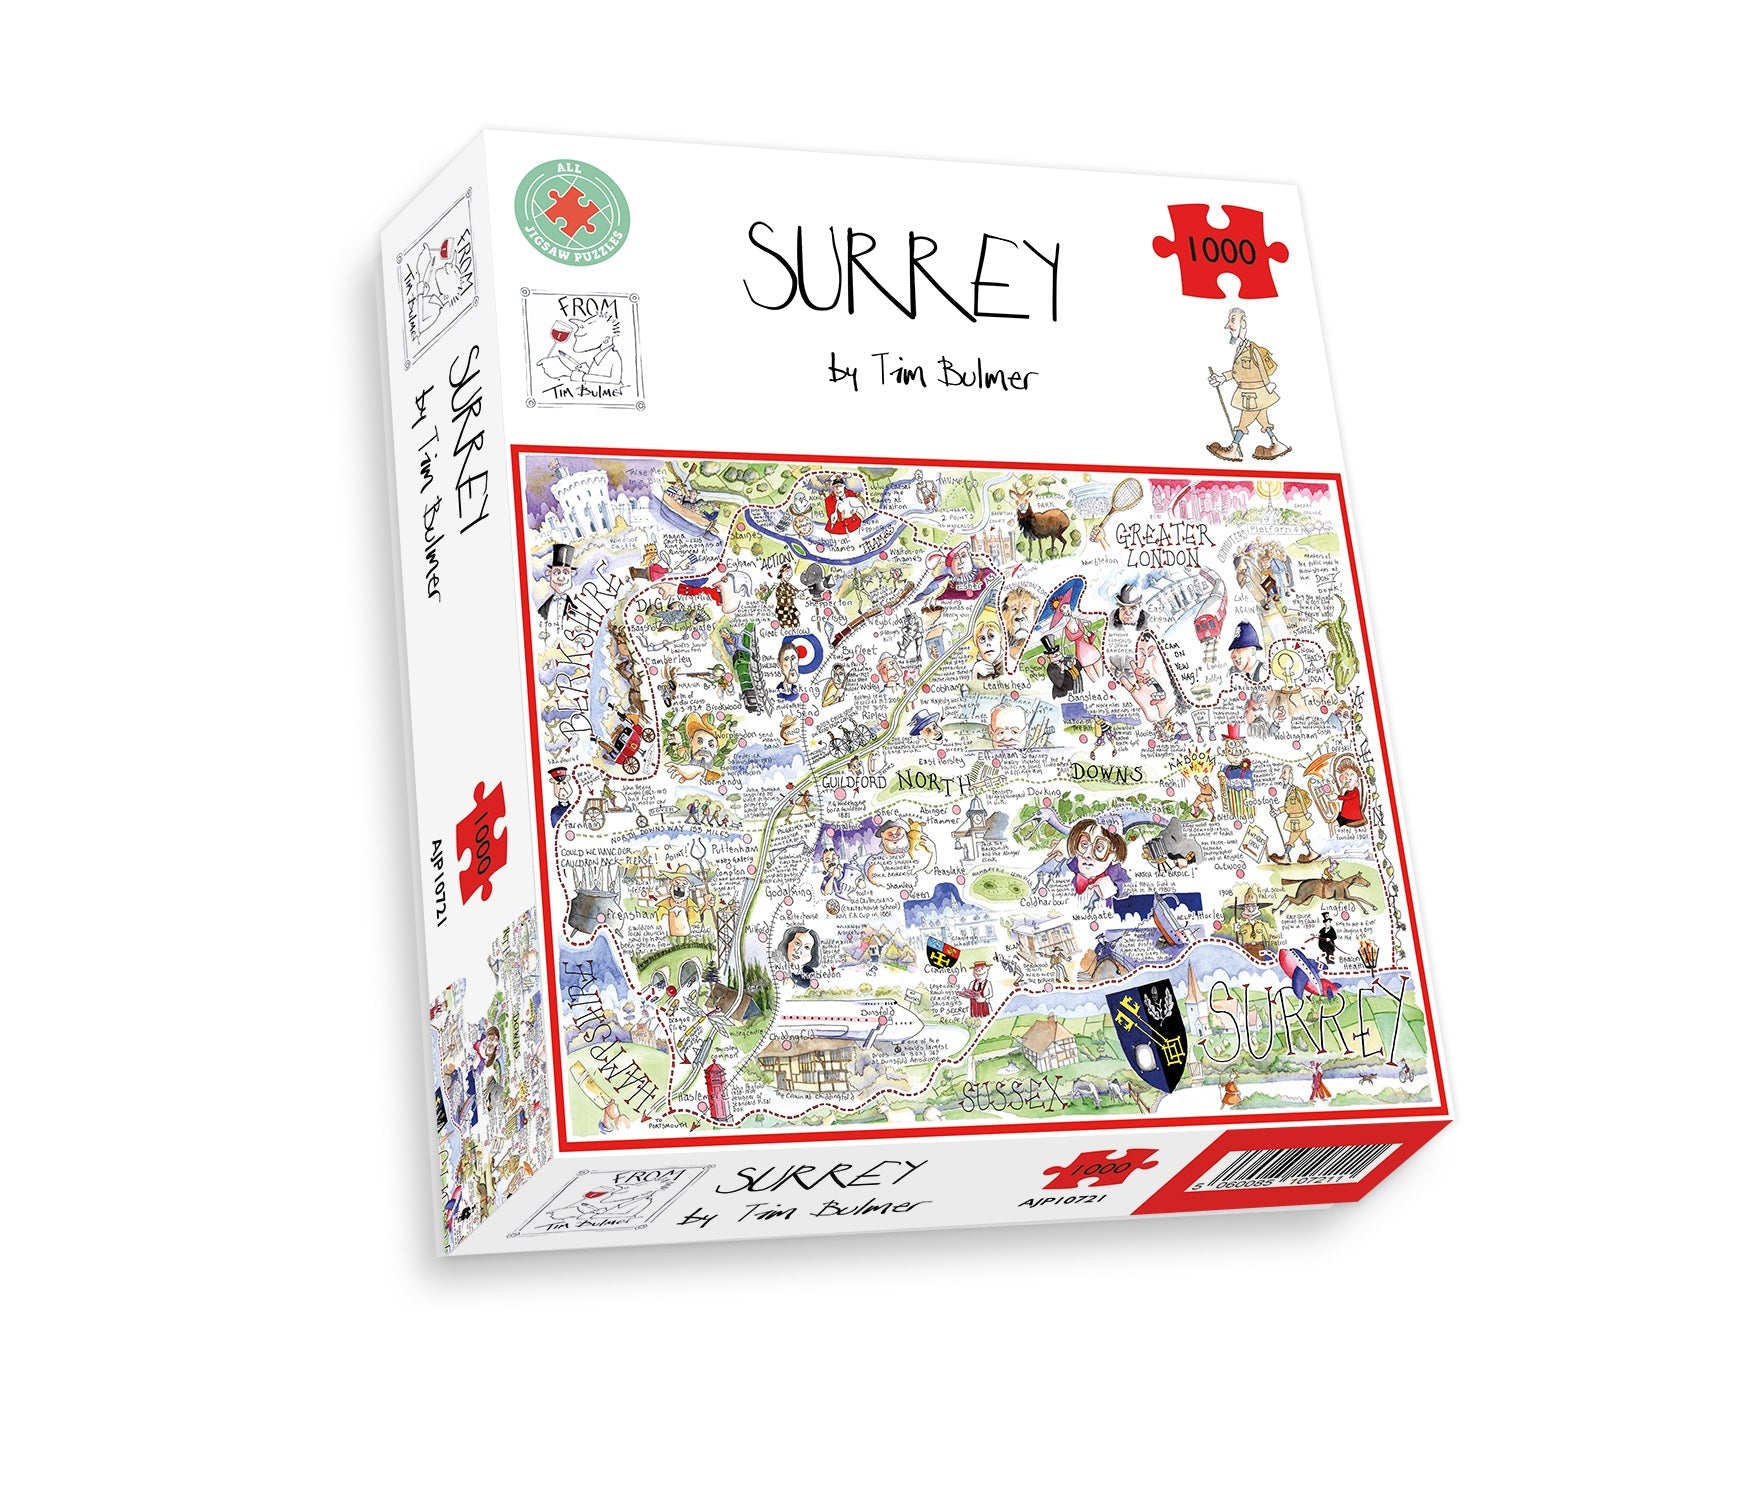 Surrey - Tim Bulmer 1000 piece Jigsaw box